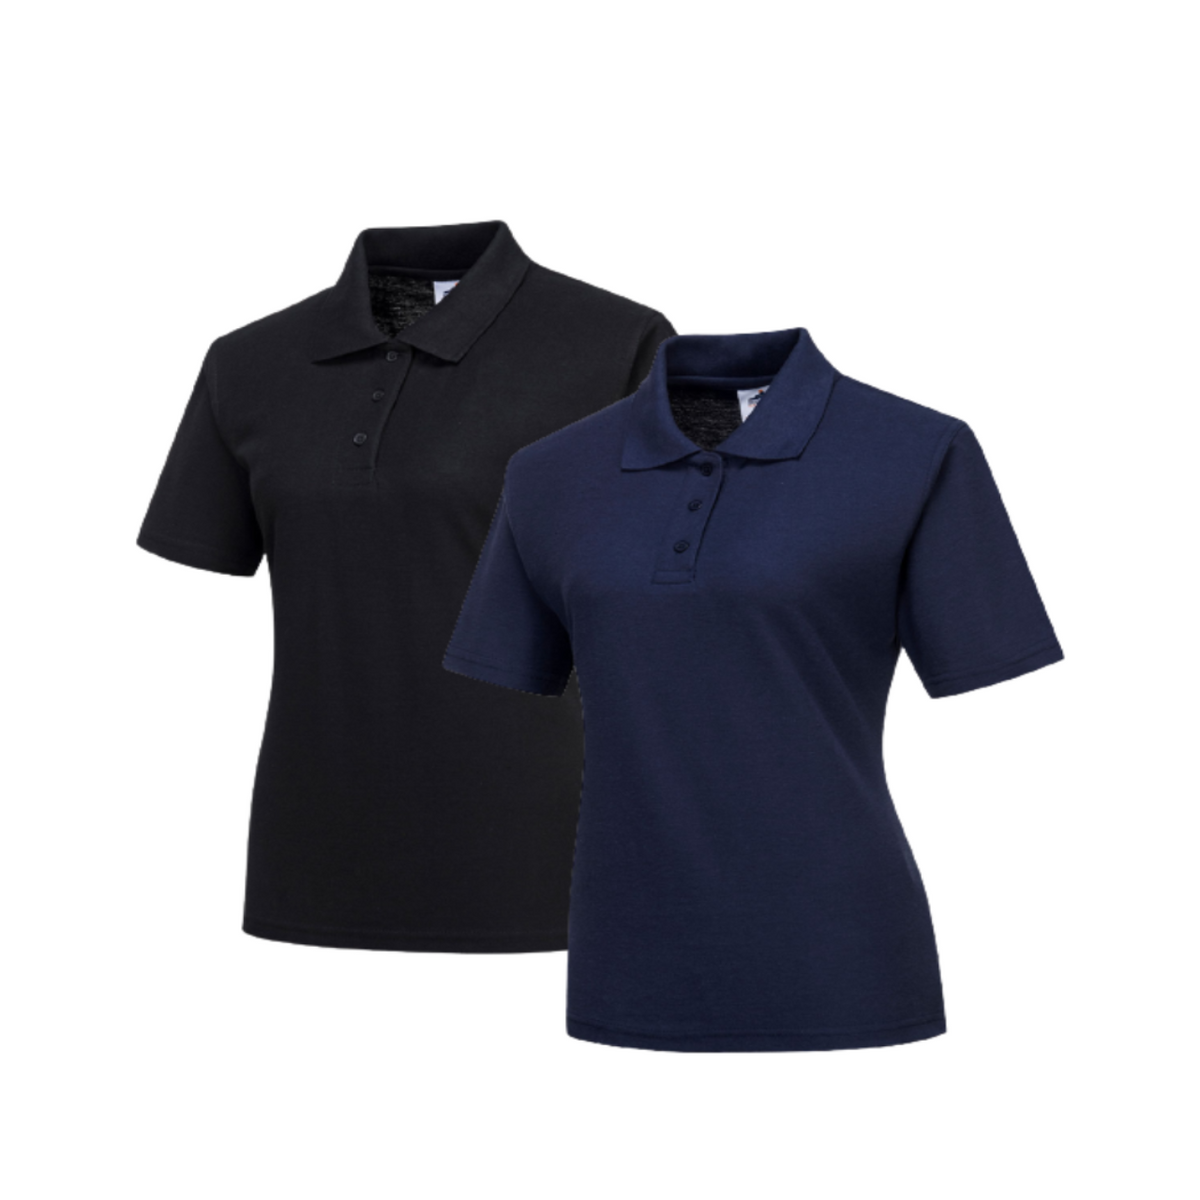 Portwest Naples Ladies Polo Shirt Ribbed Collar Soft Short Sleeve Shirt B209-Collins Clothing Co